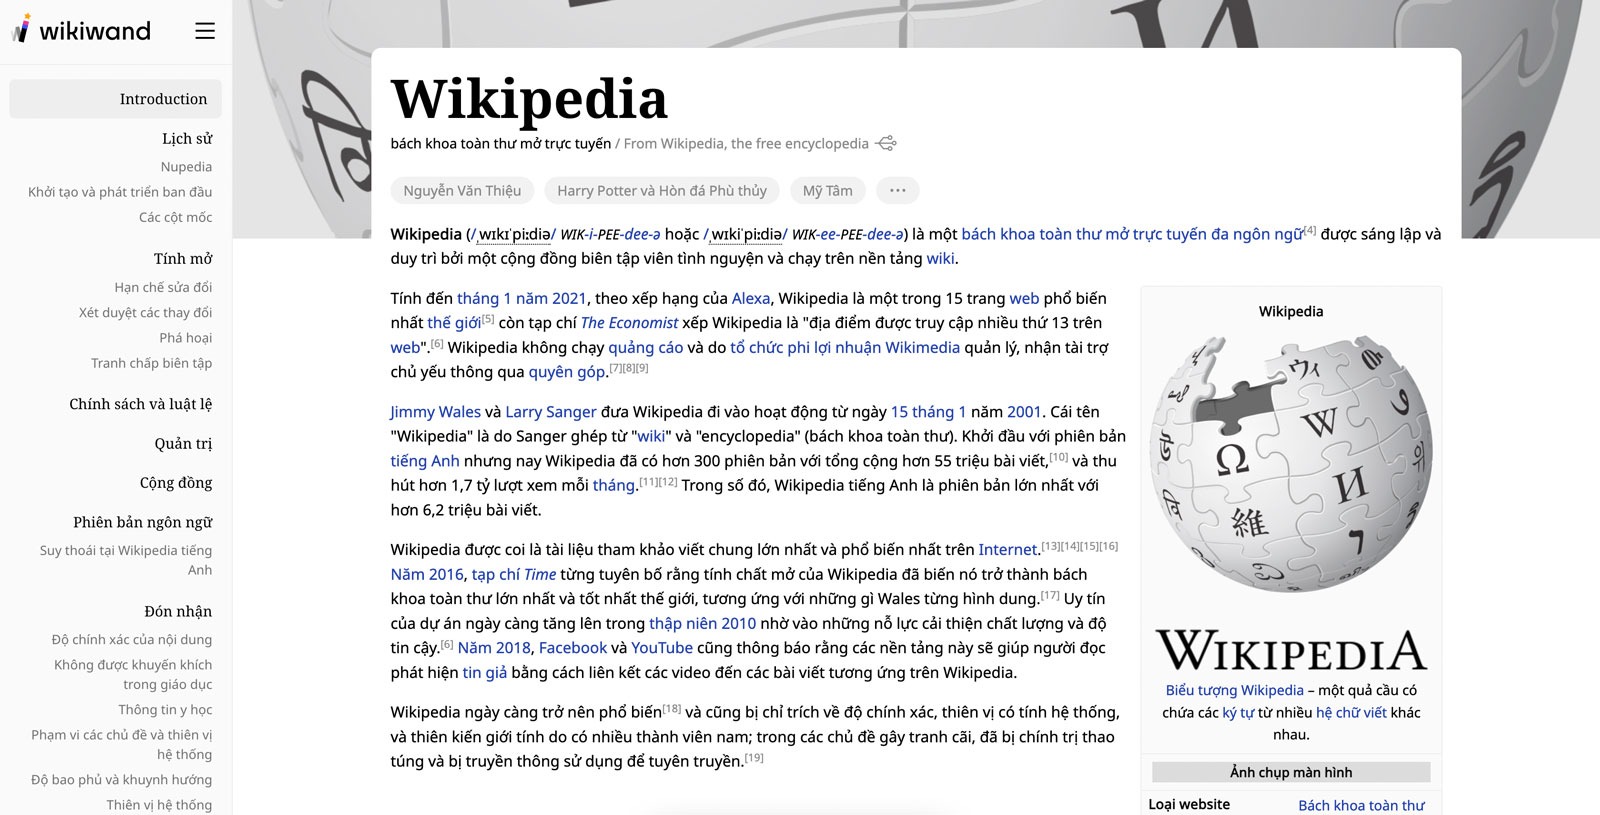 Giao diện của Wikiwand